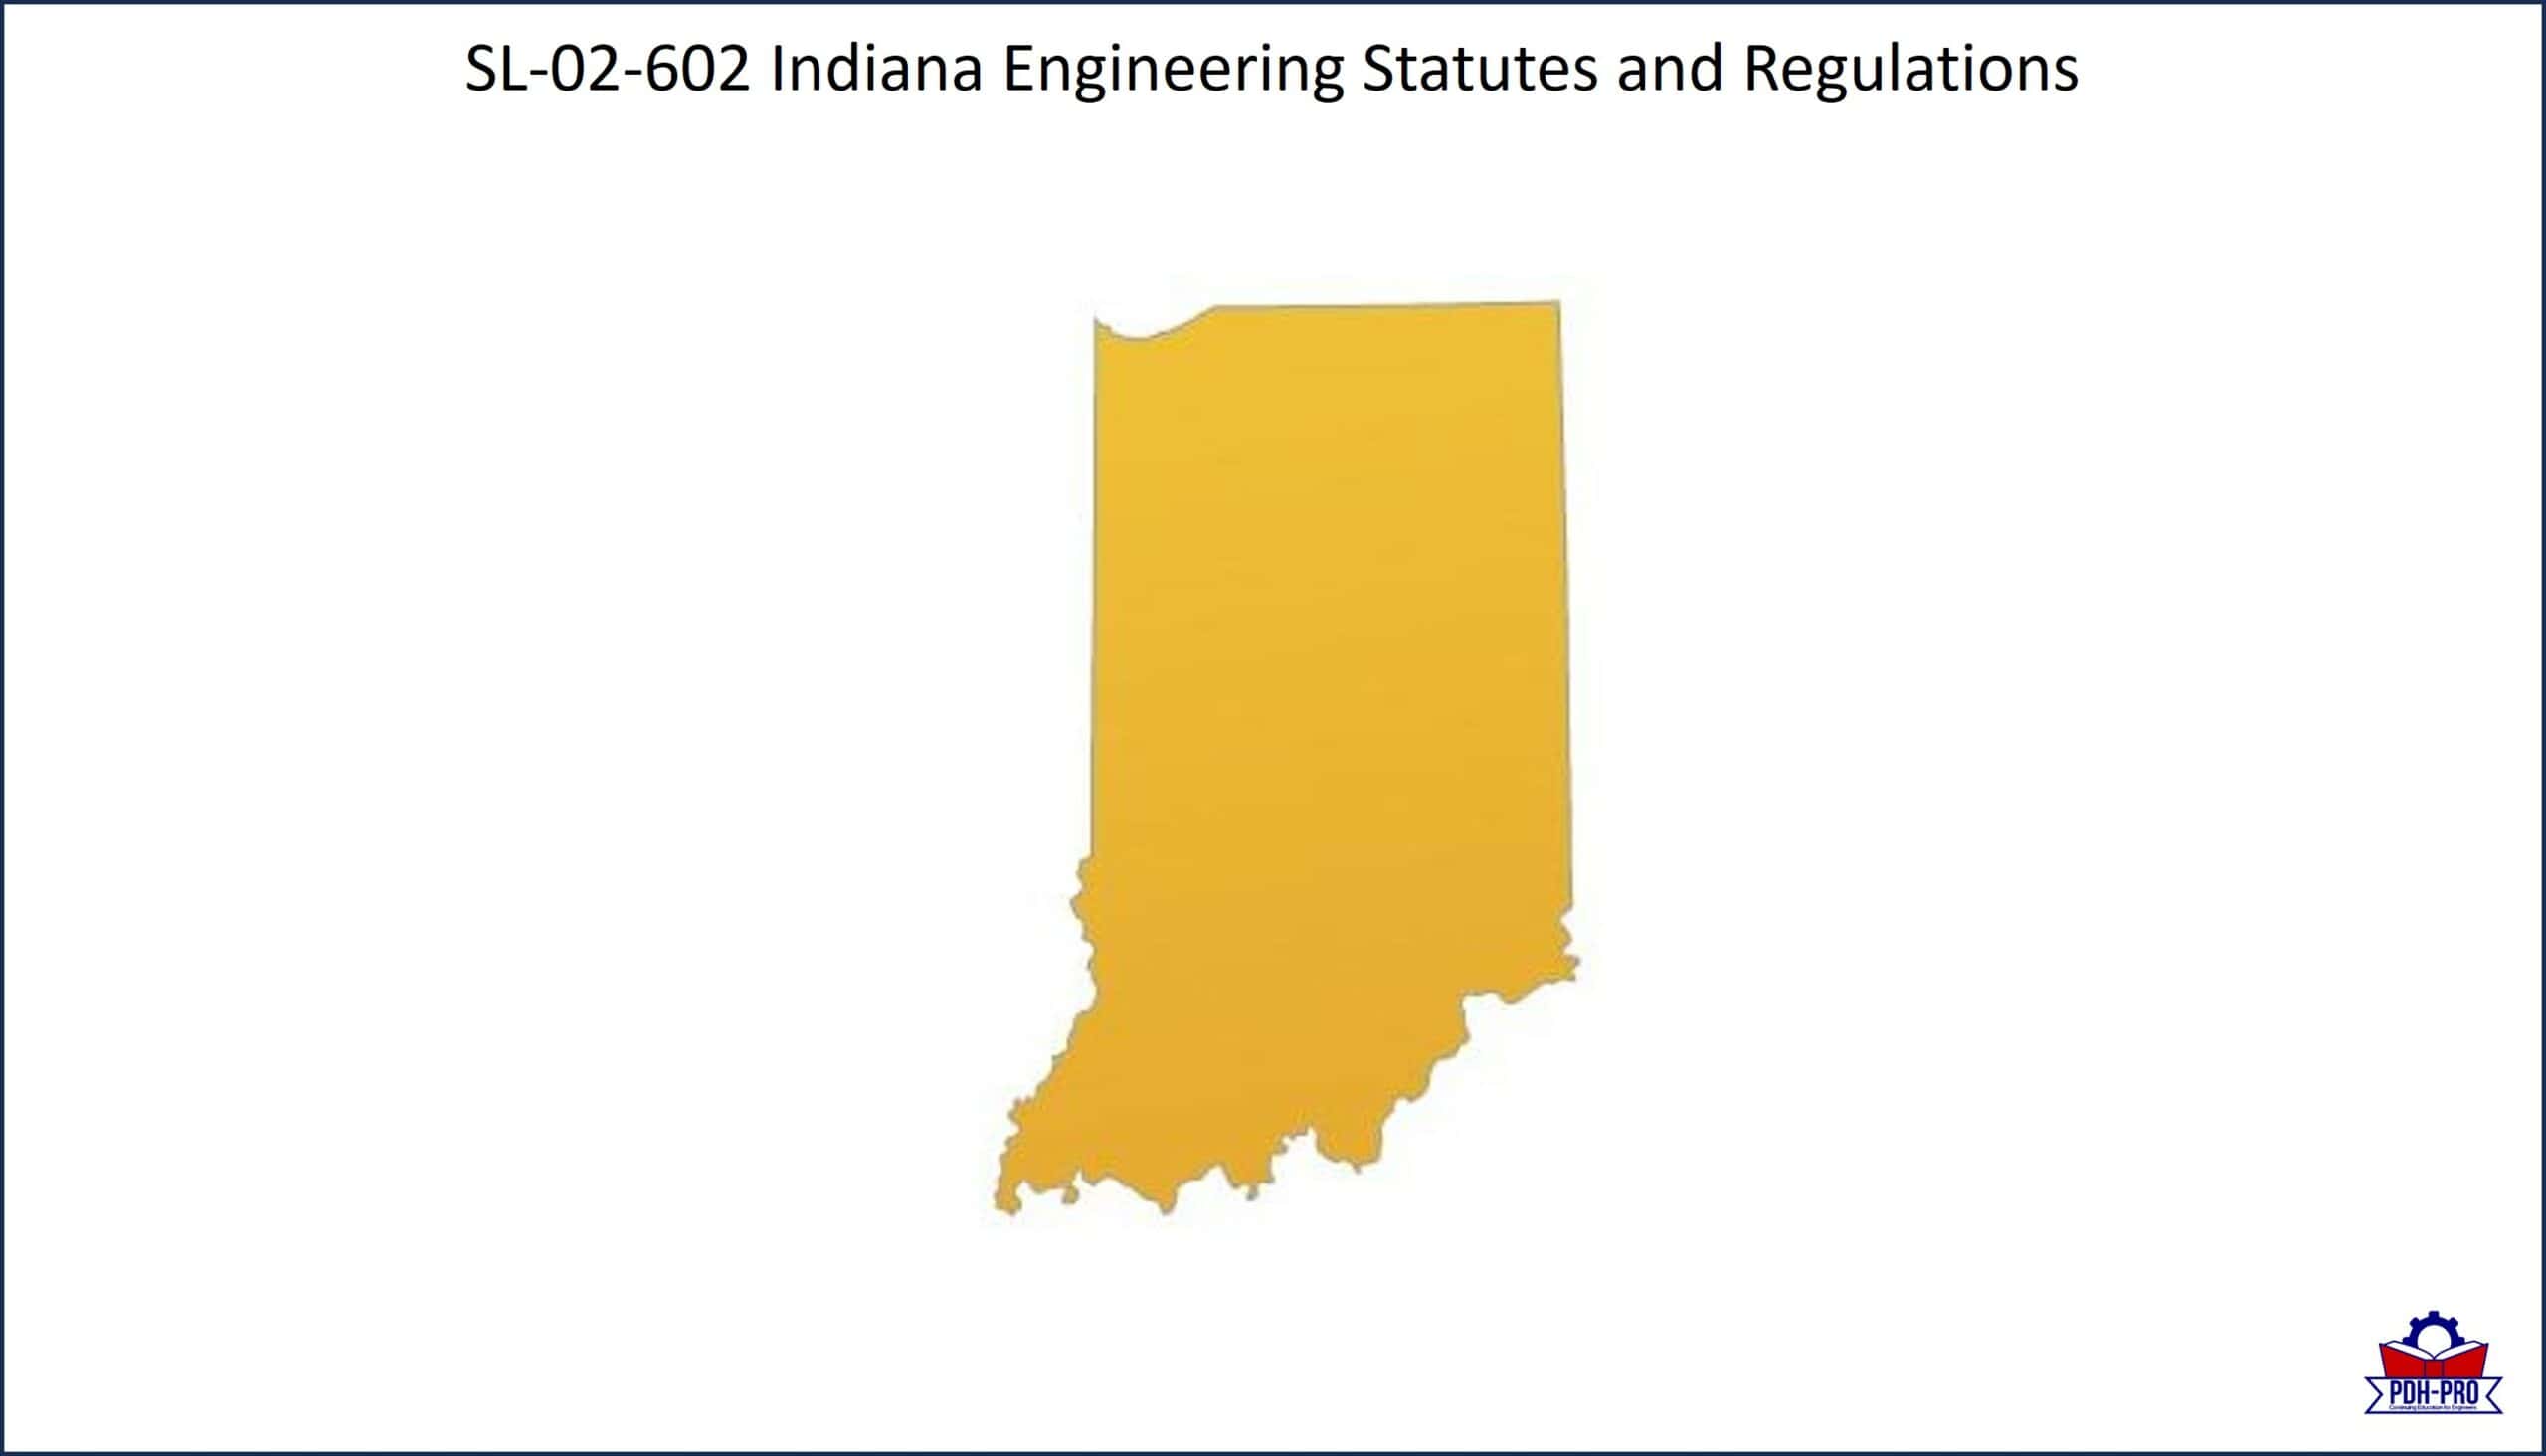 Indiana Engineering Statutes and Regulations